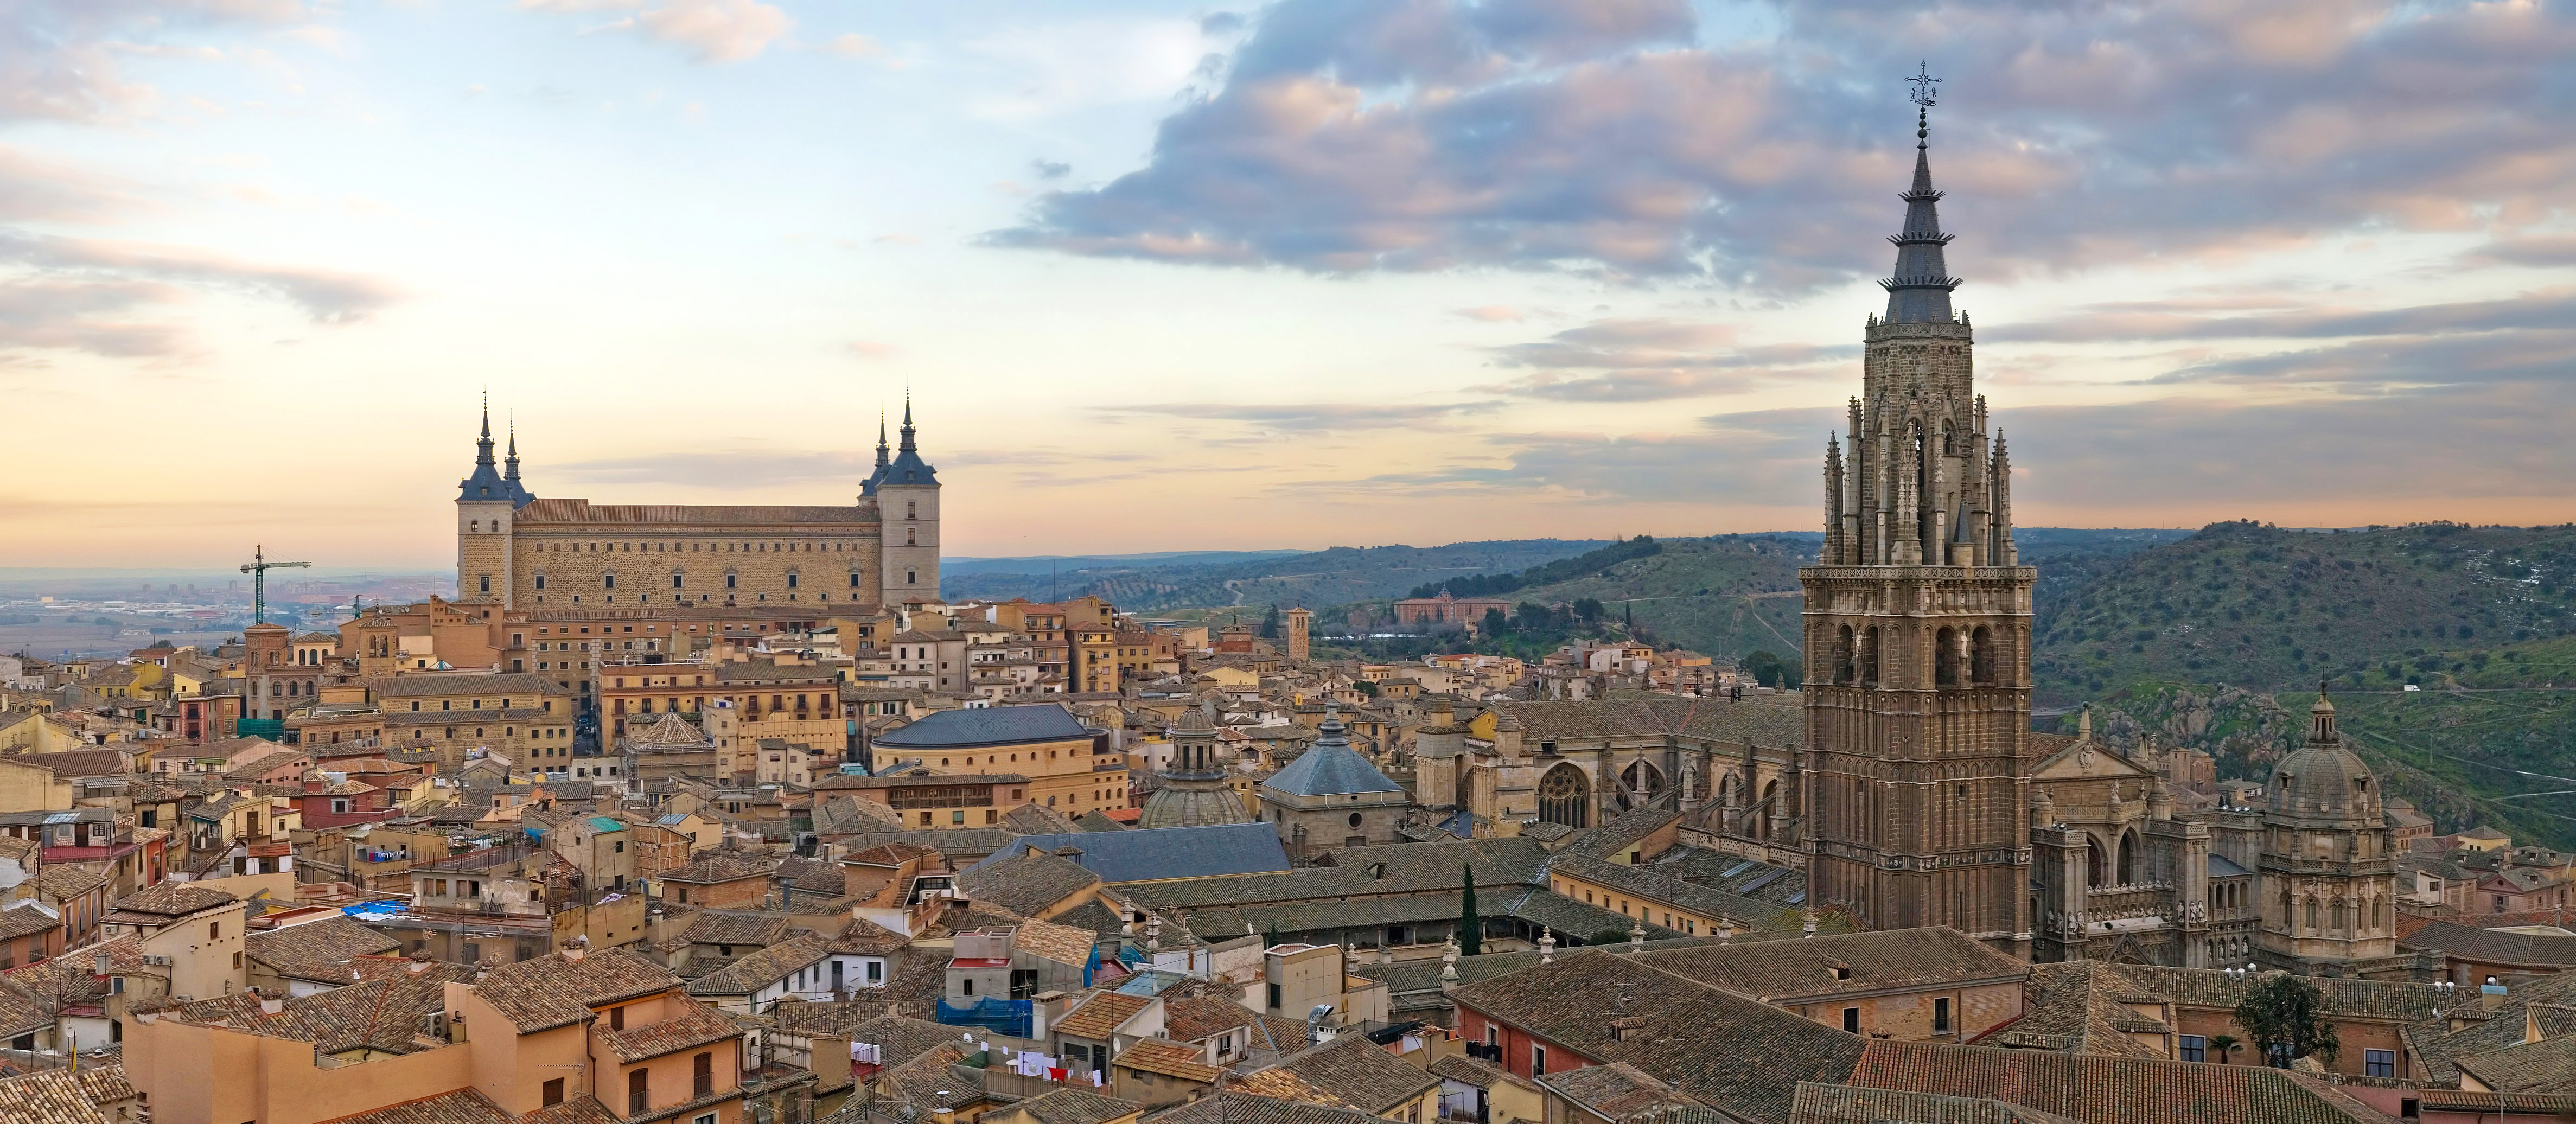 Toledo Skyline Panorama, Spain   Dec 2006 Edit